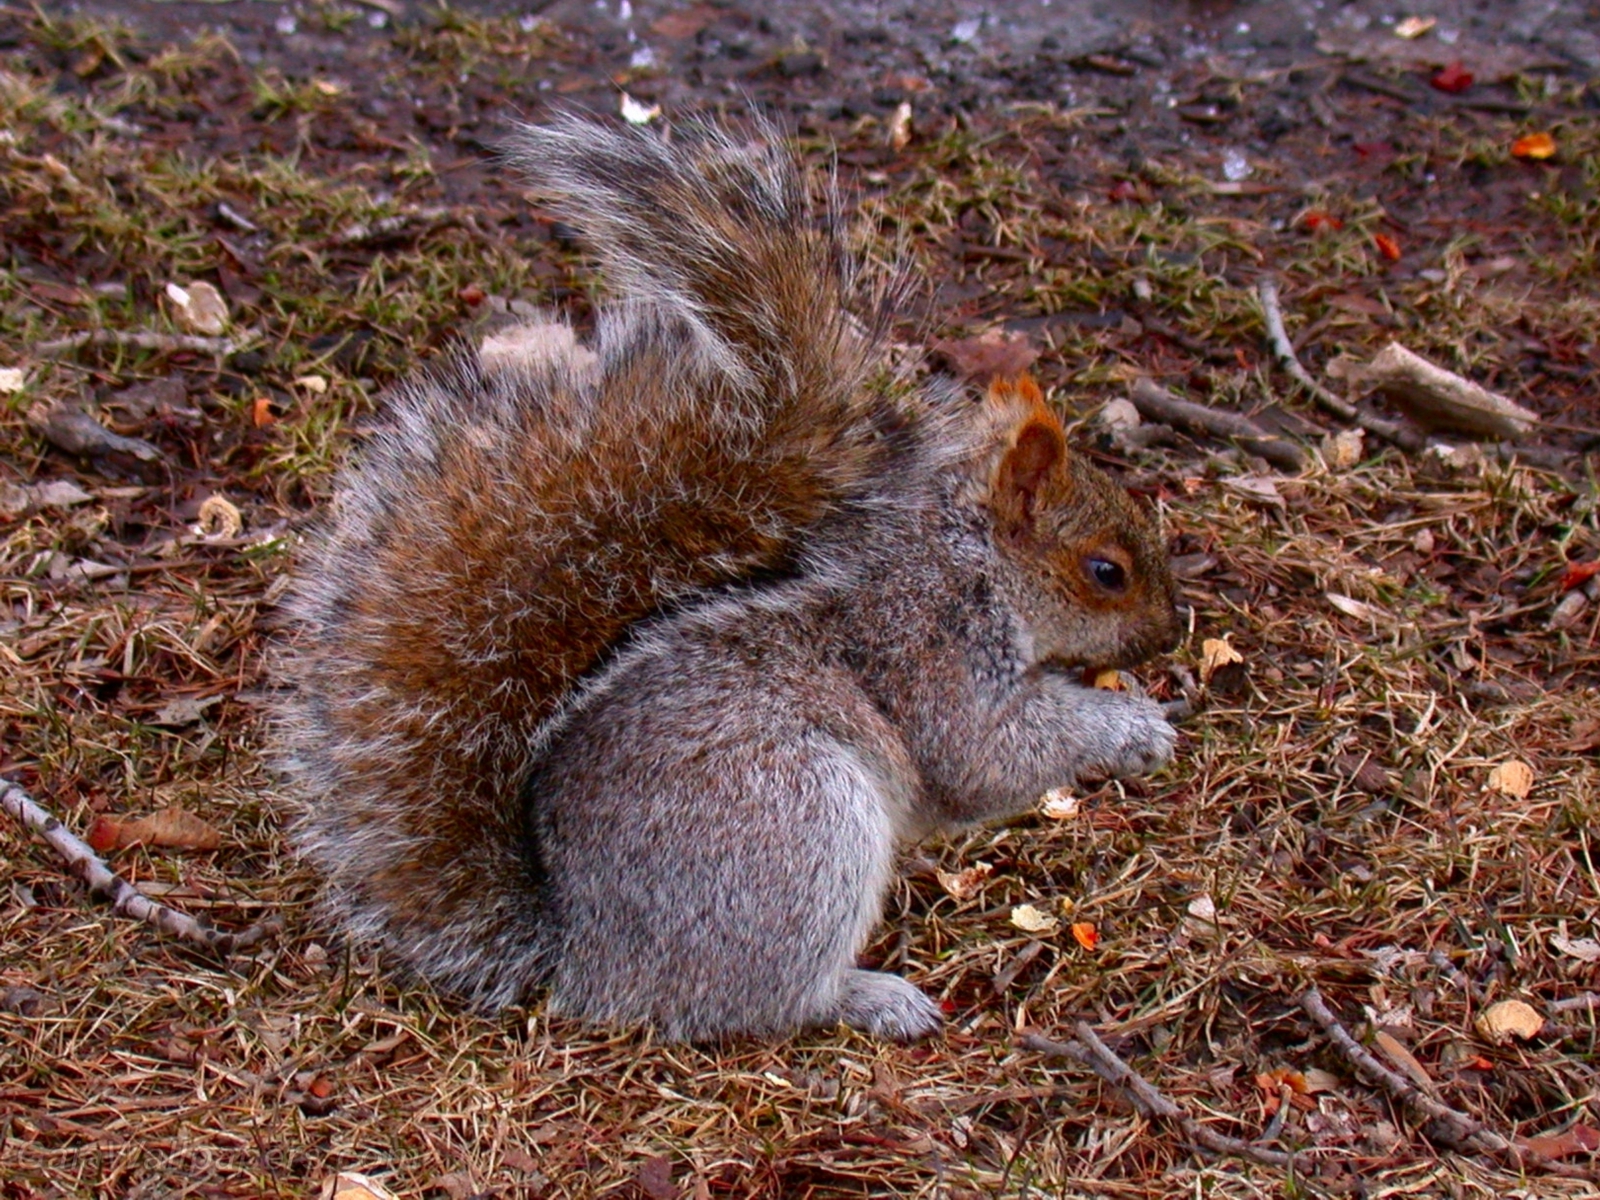 Squirrel eating peanut - Free desktop wallpapers